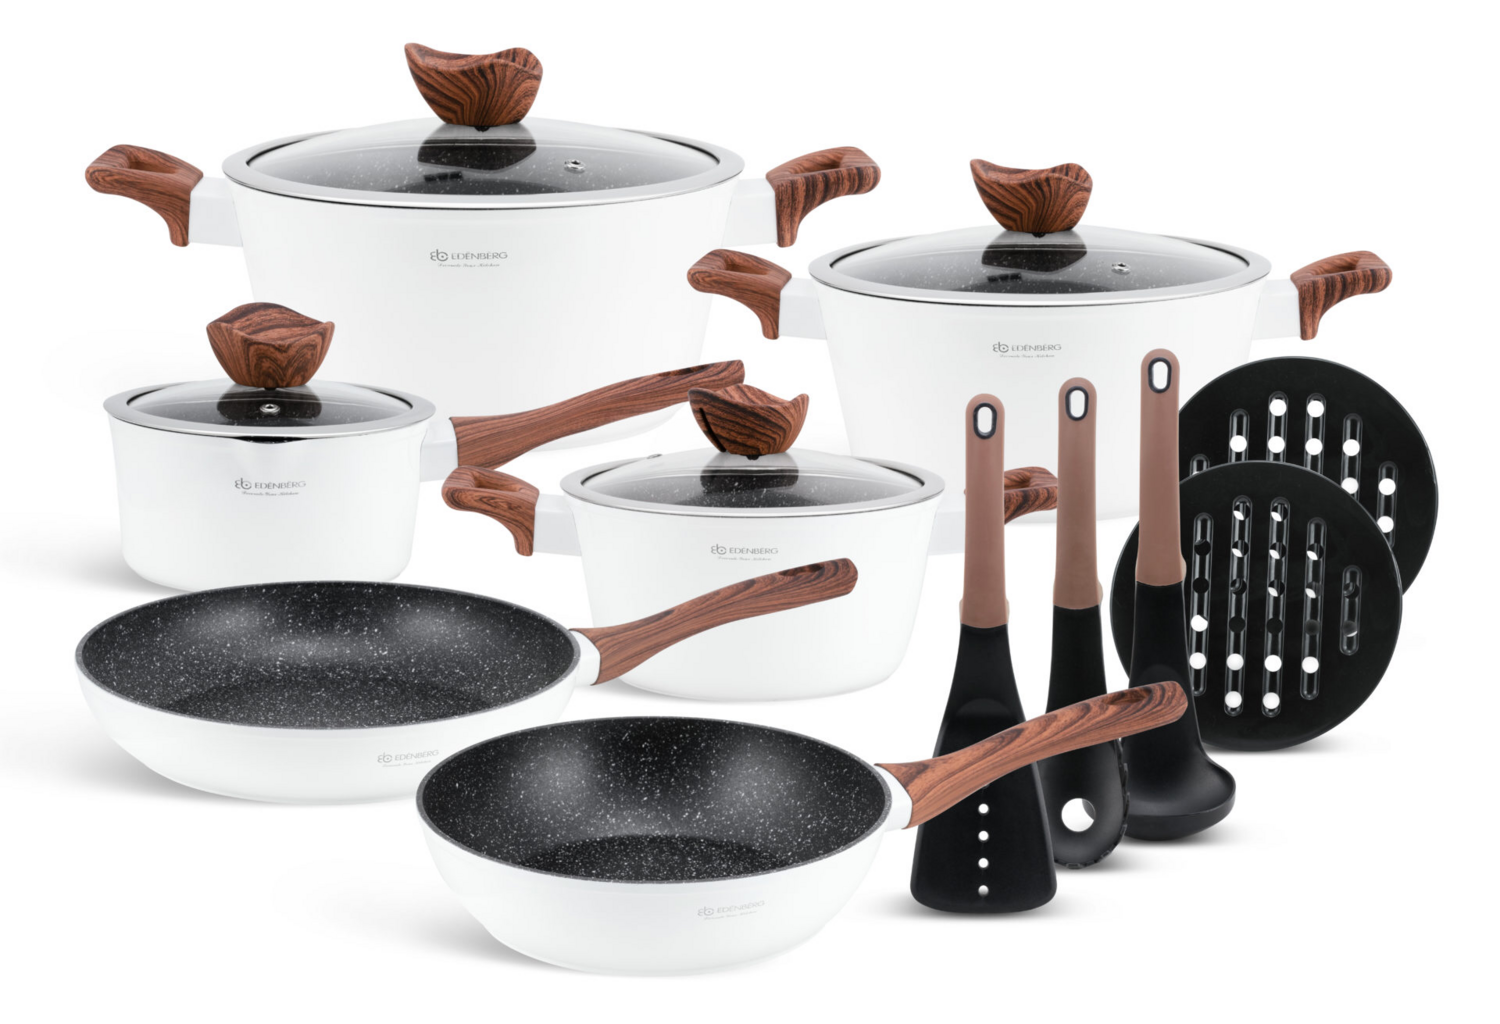 Edenberg Non Stick Cookware set/sufuria with kitchen tools 15pcs EB-5622 White Color